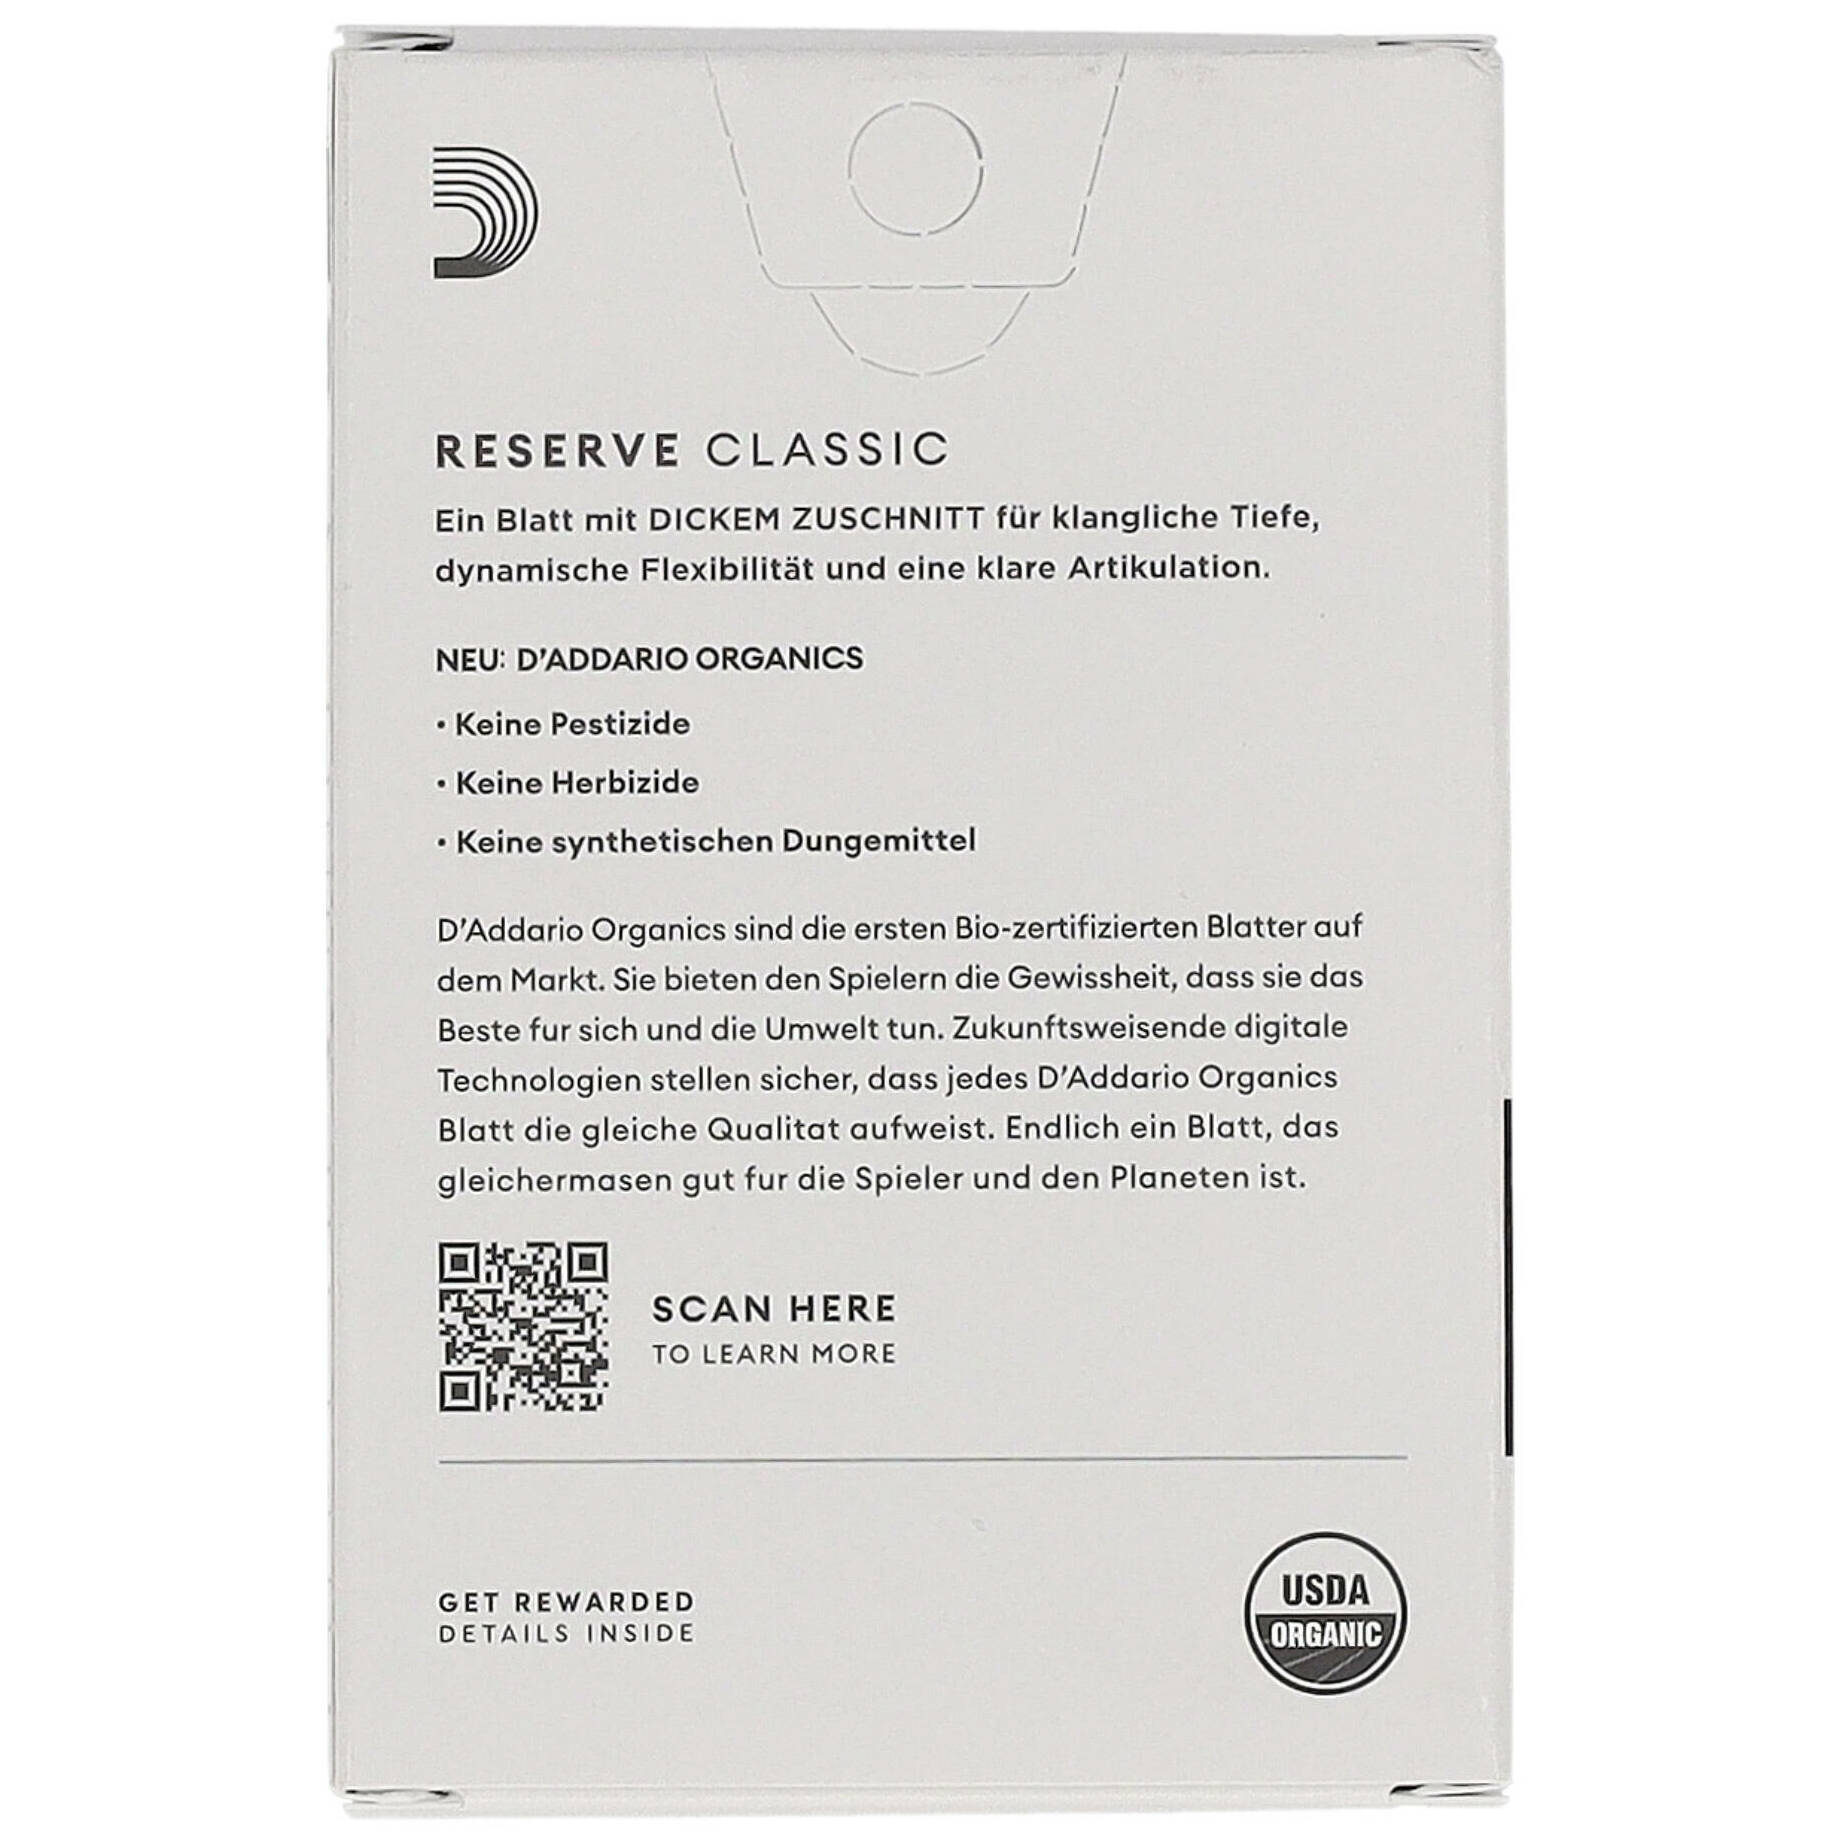 D’Addario Woodwinds Organic Reserve Classic German - Deutsche Klarinette 1,5 - 10er Pack 1